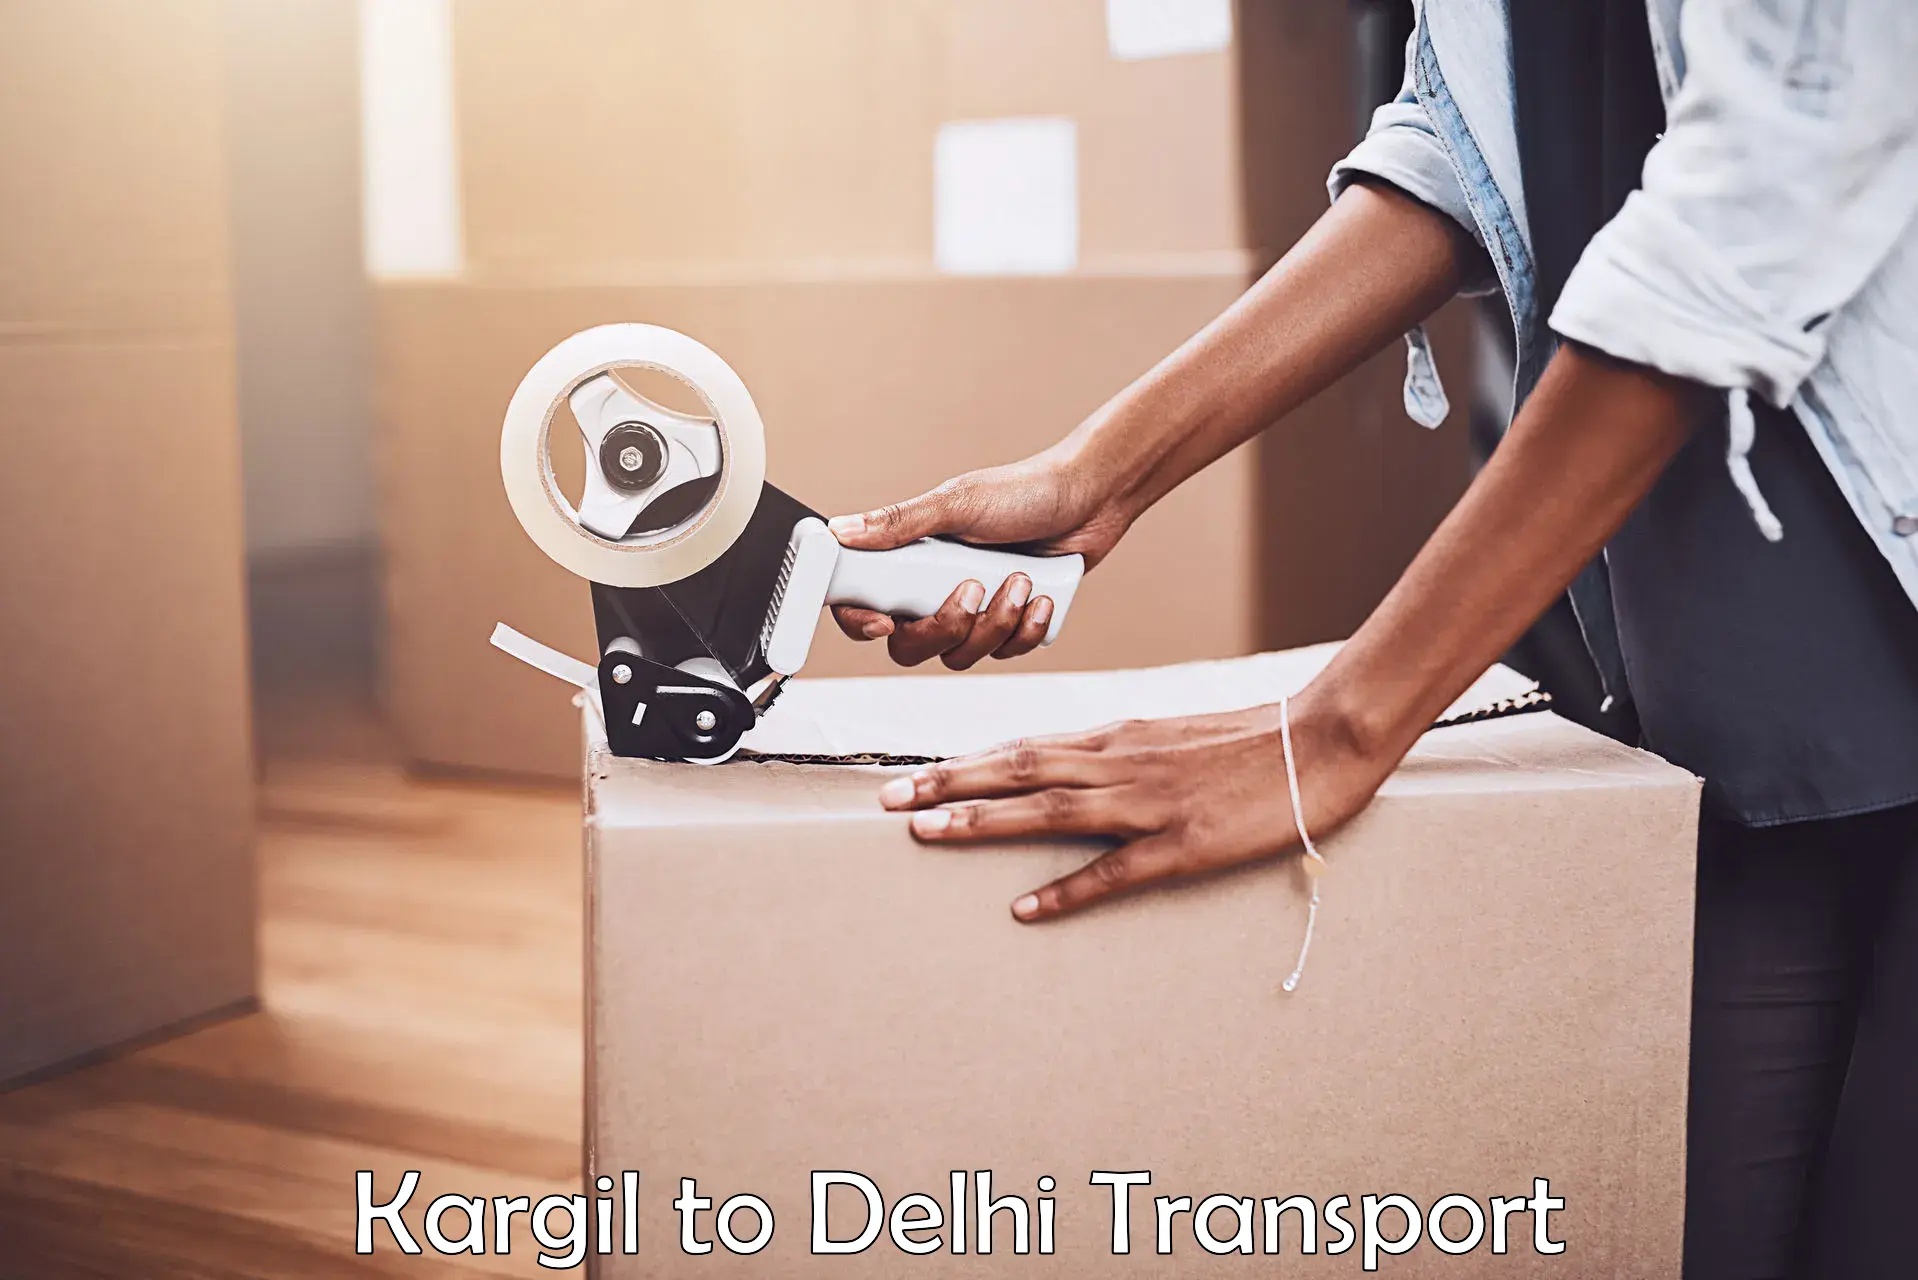 Truck transport companies in India Kargil to Delhi